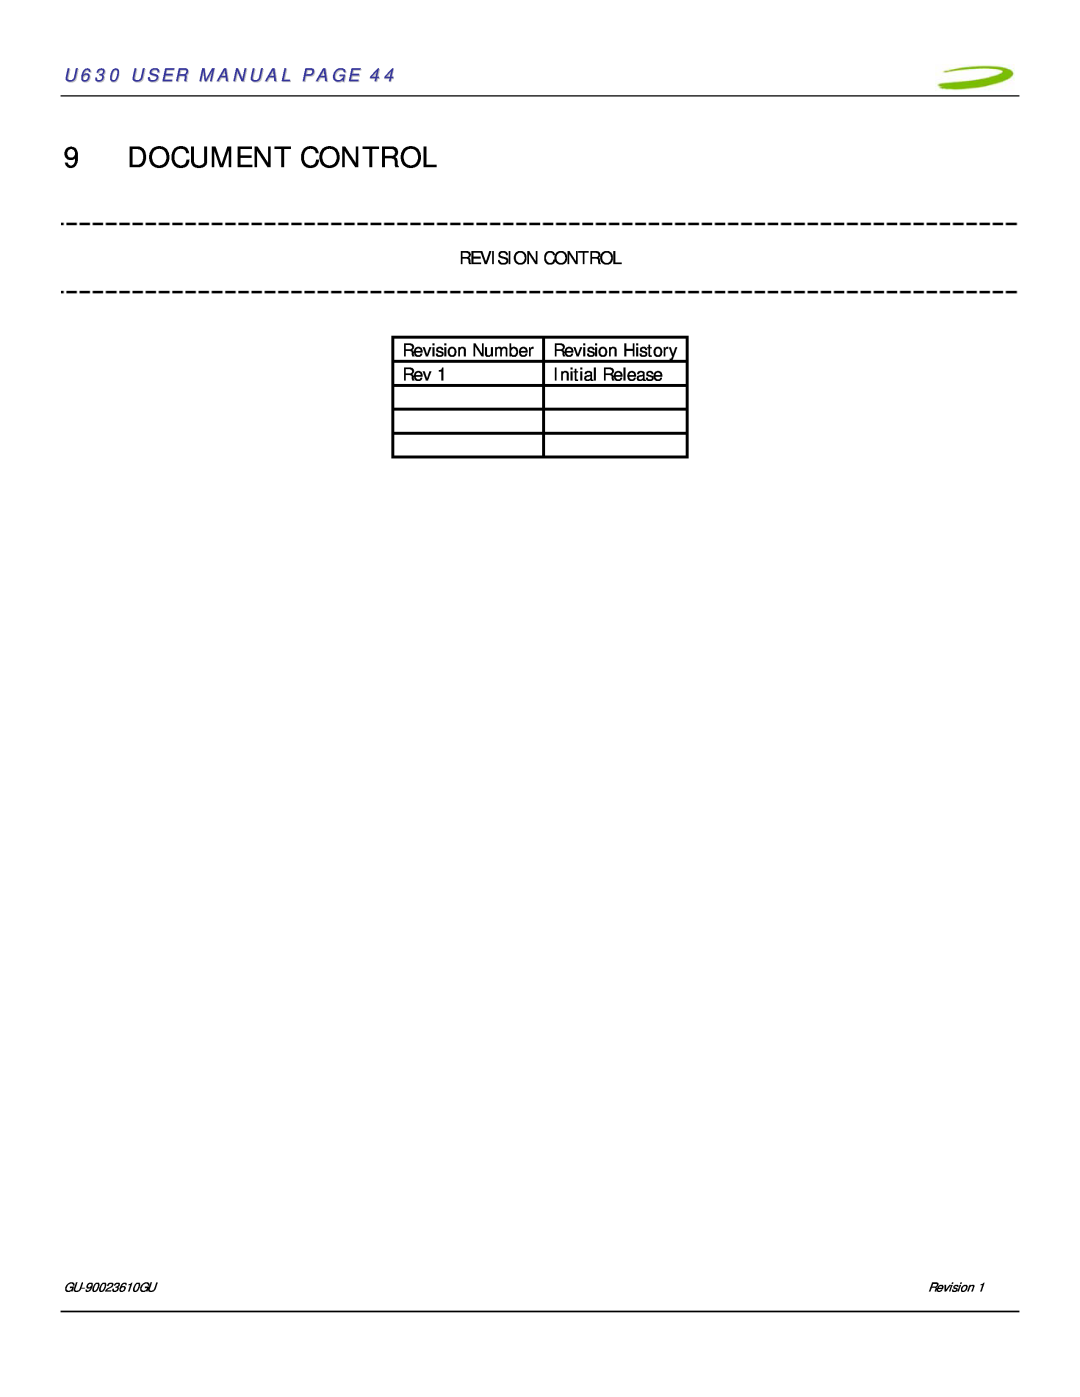 InFocus Document Control, U630 USER MANUAL PAGE, Revision Control, Revision Number, Revision History, Initial Release 